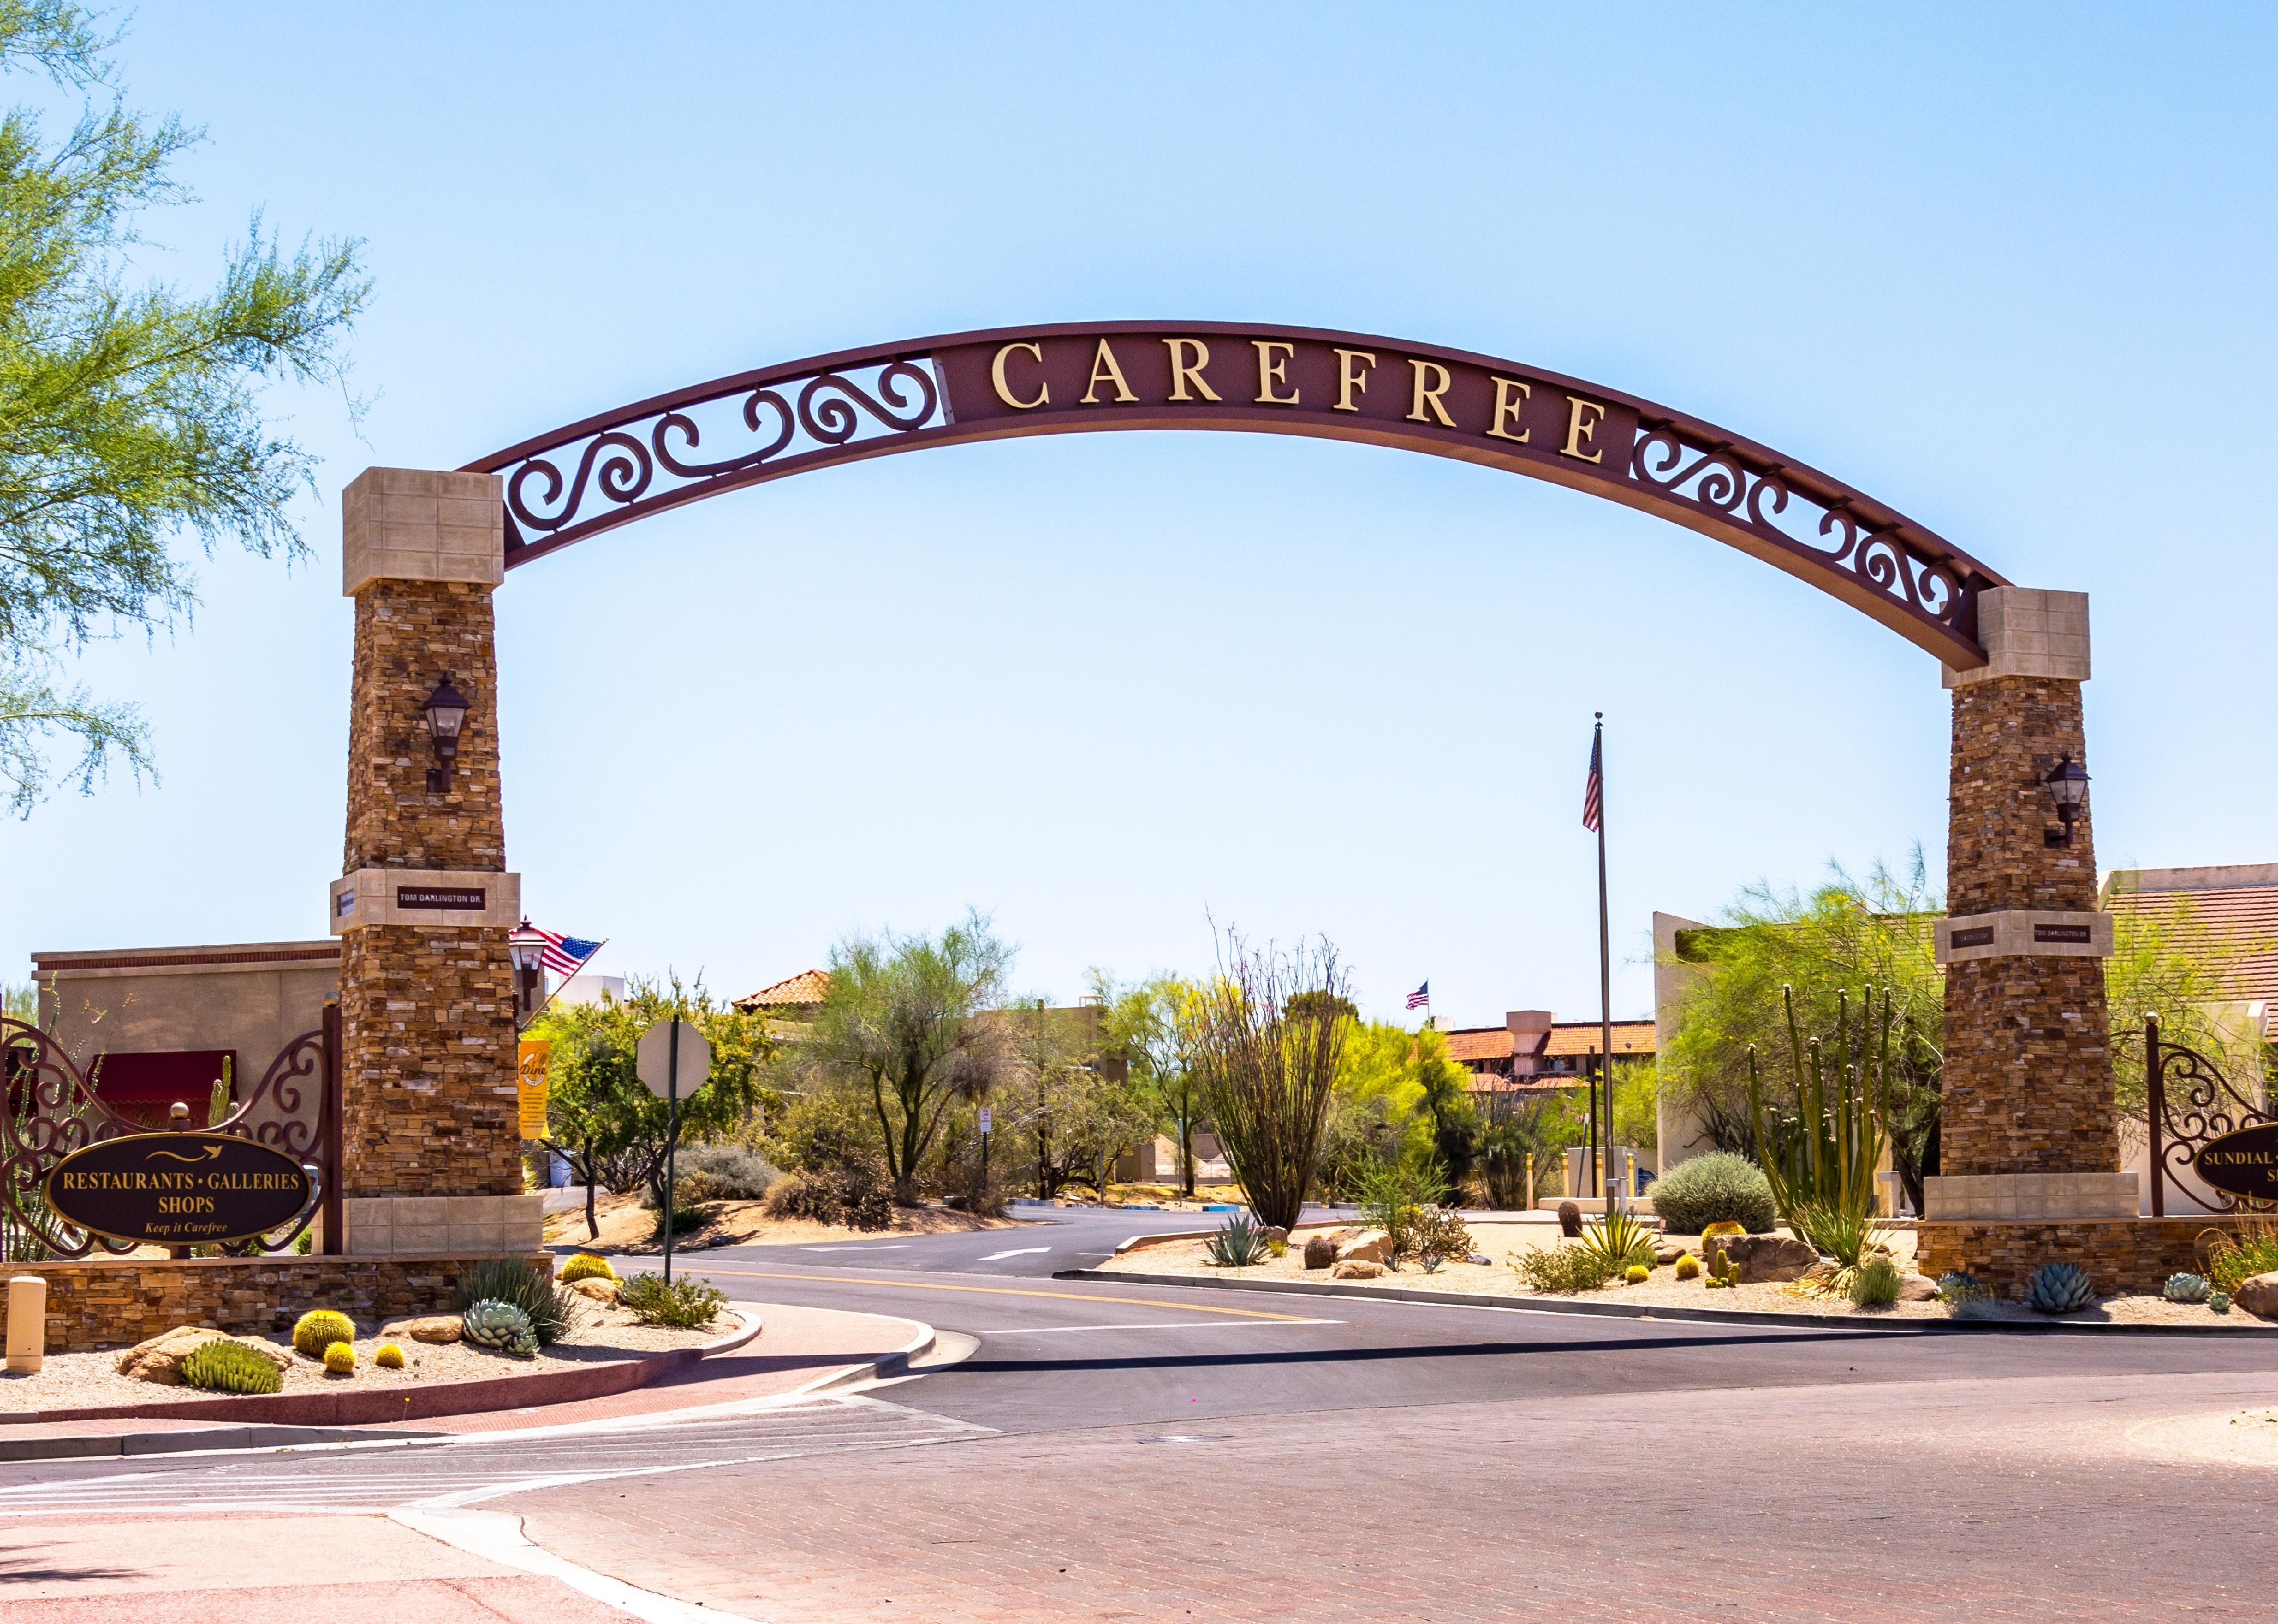 Carefree, Arizona arhcway sign